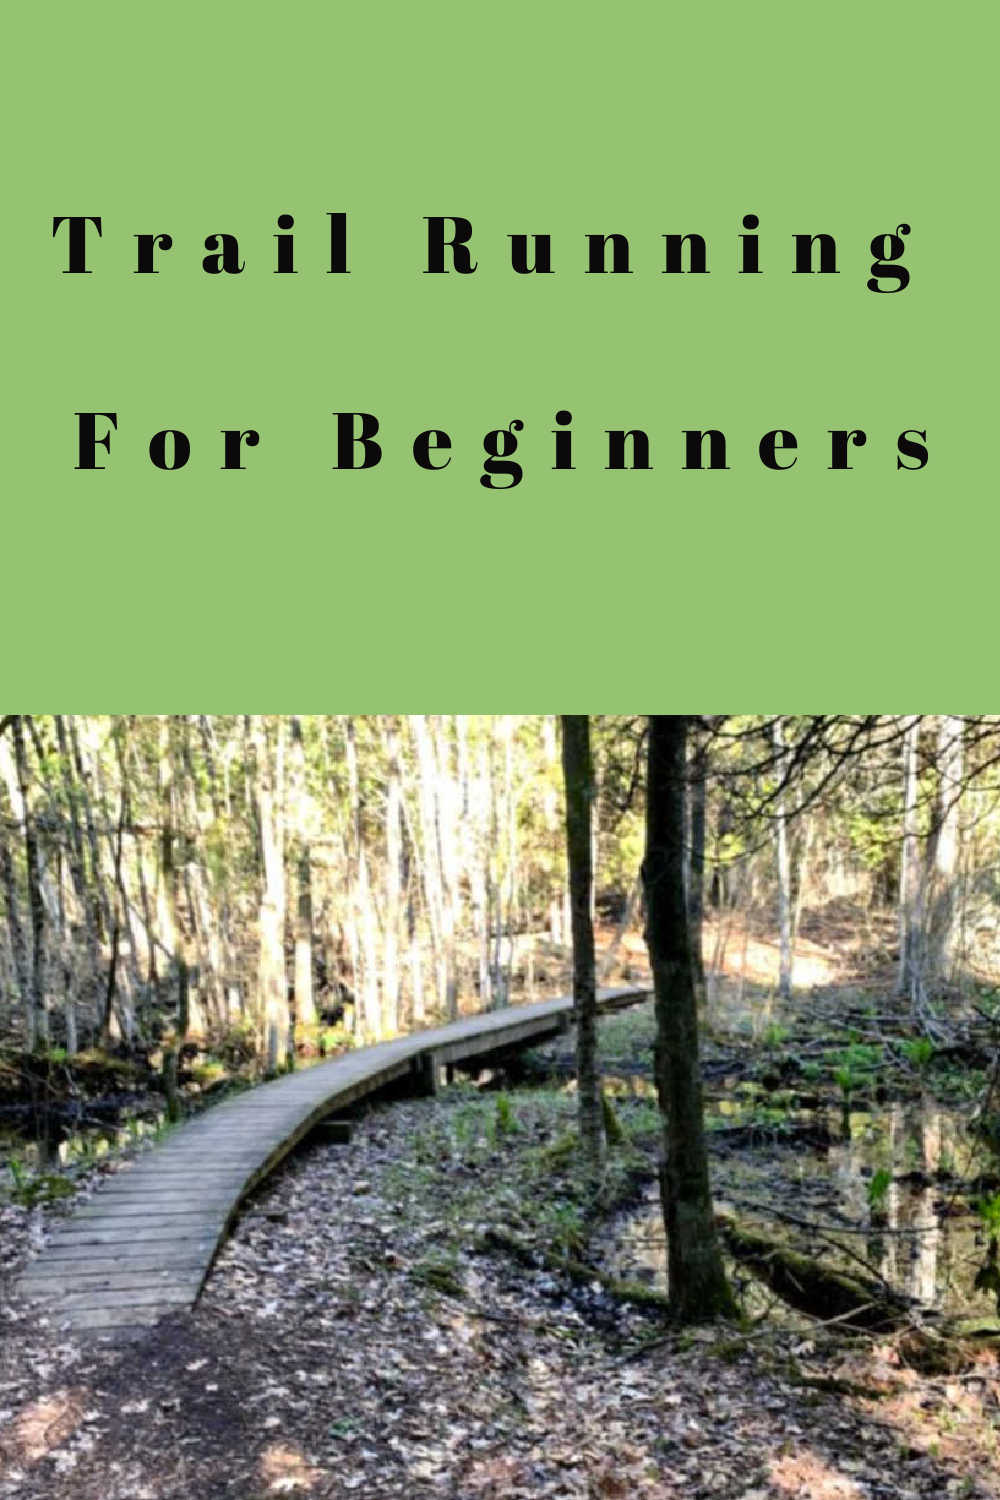 Trail Running for Beginners